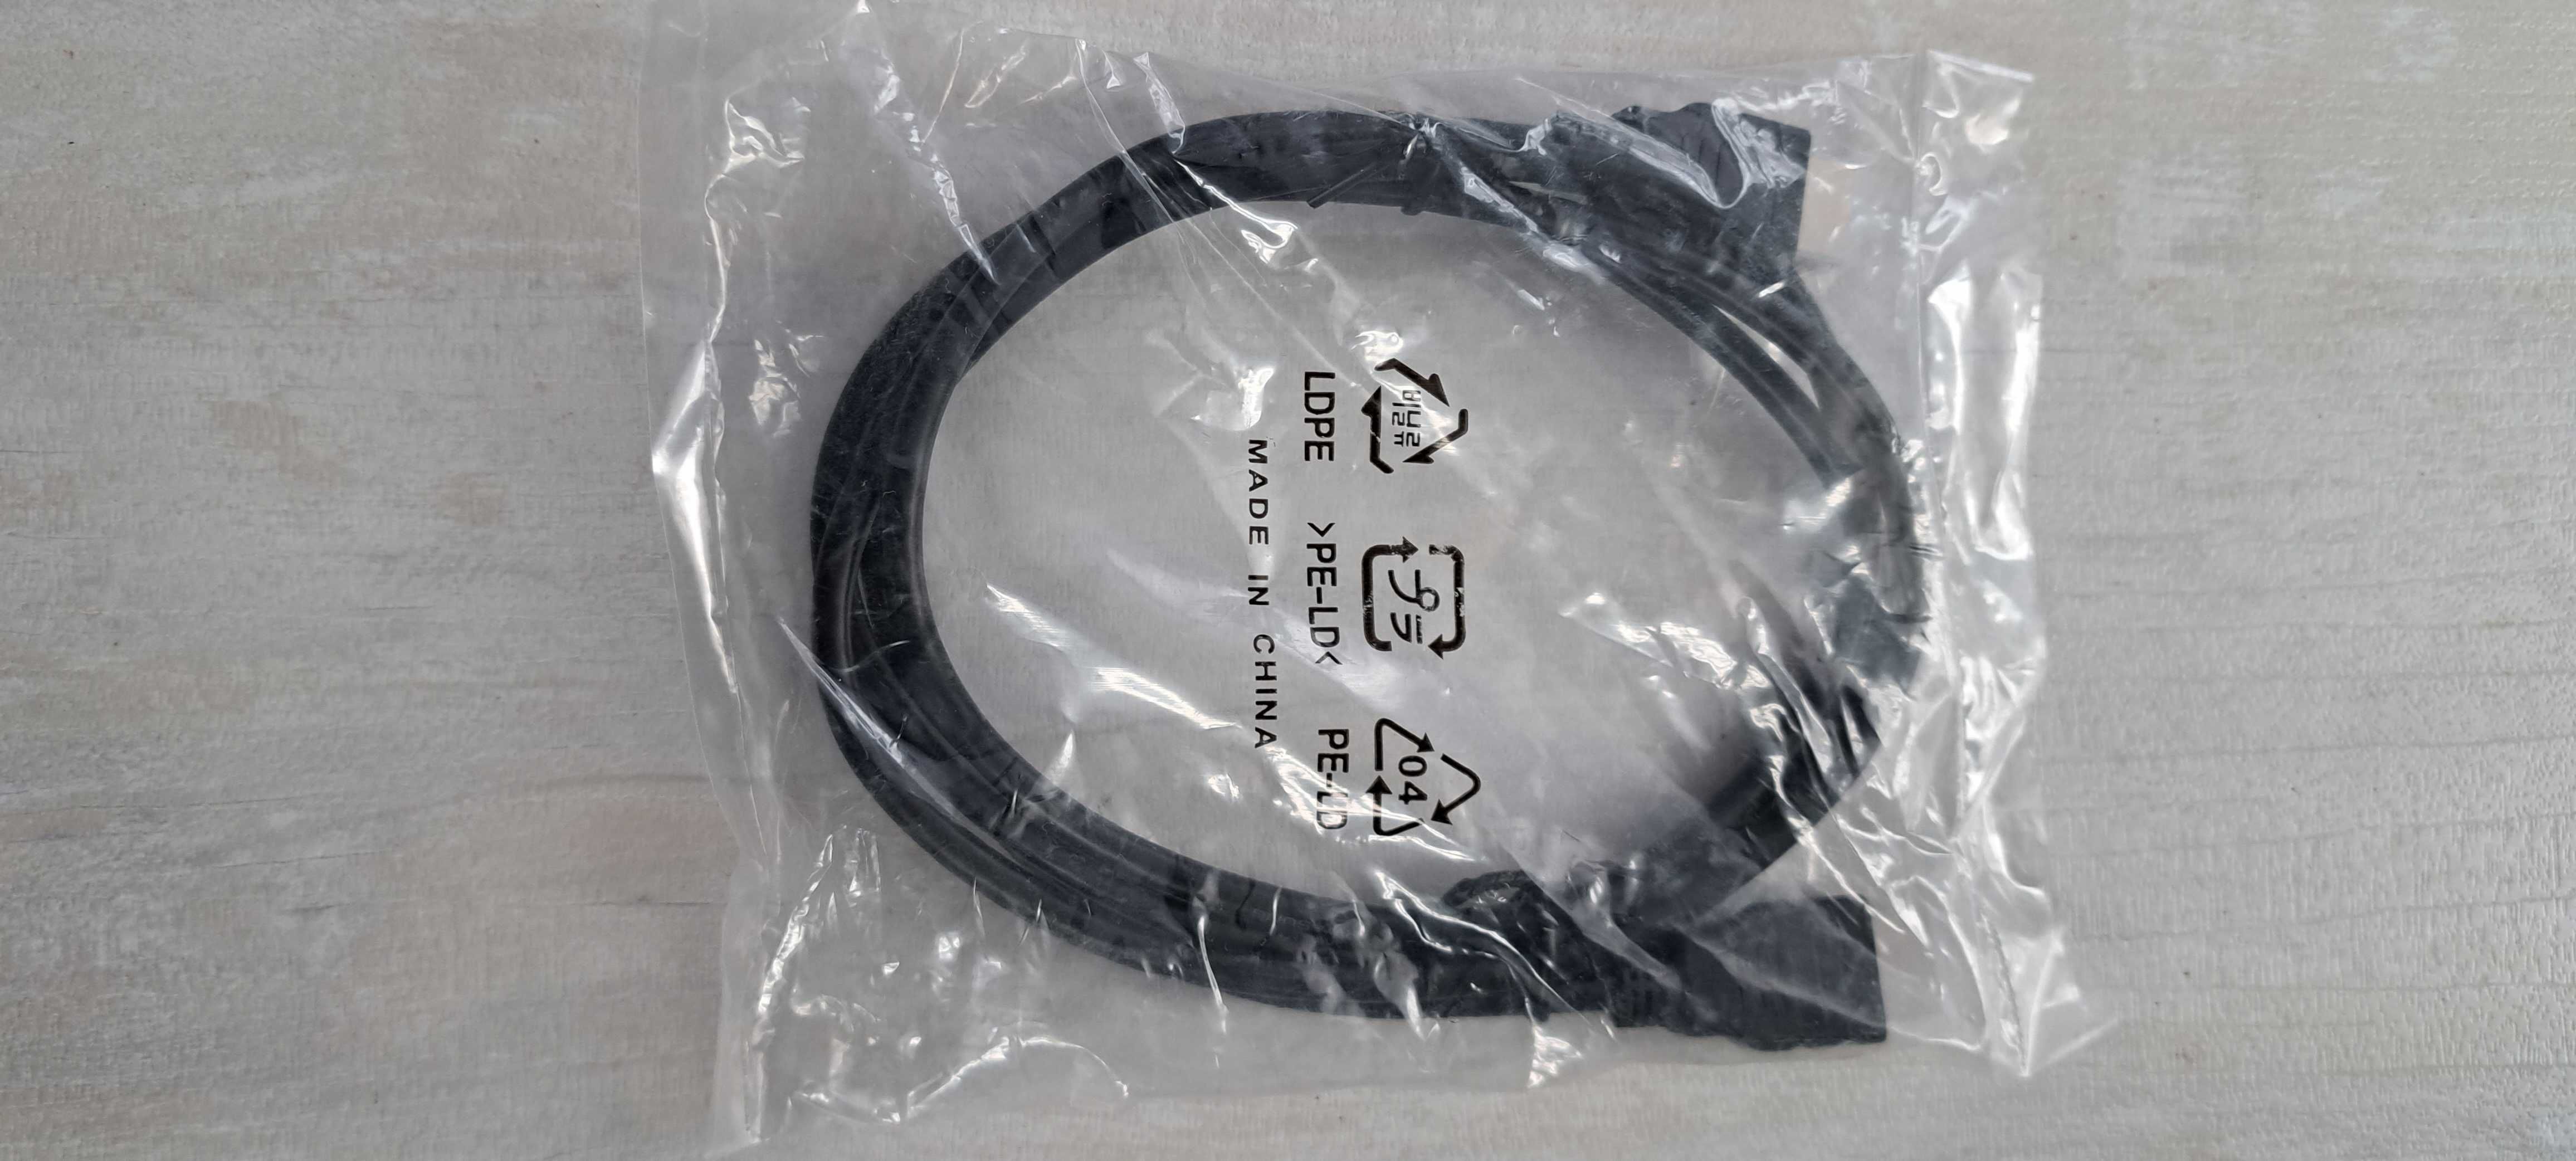 HDMI кабел 1.5м черен